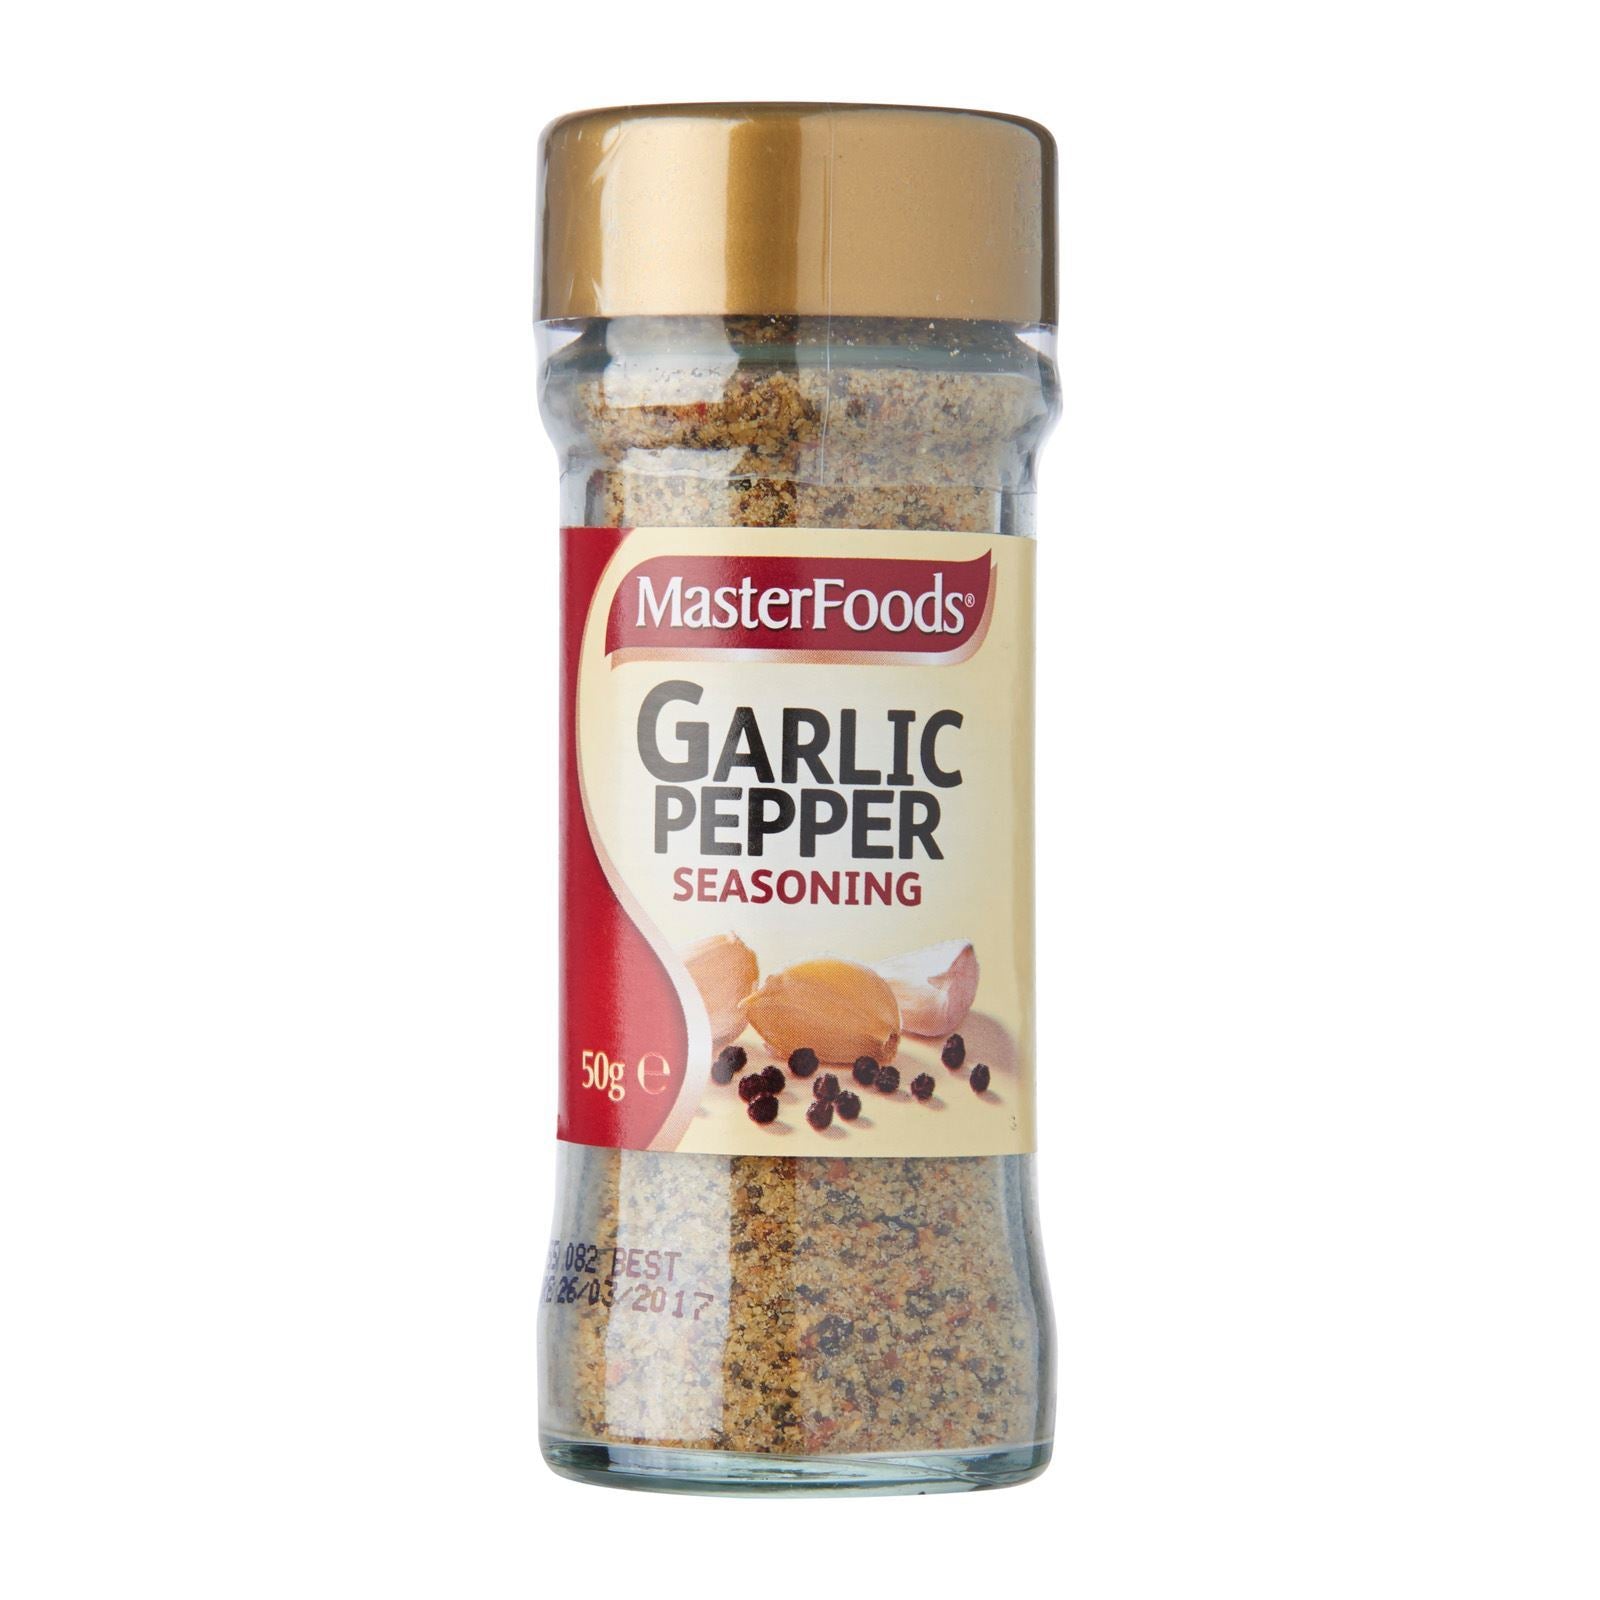 Masterfoods Garlic Pepper Seasoning Jar